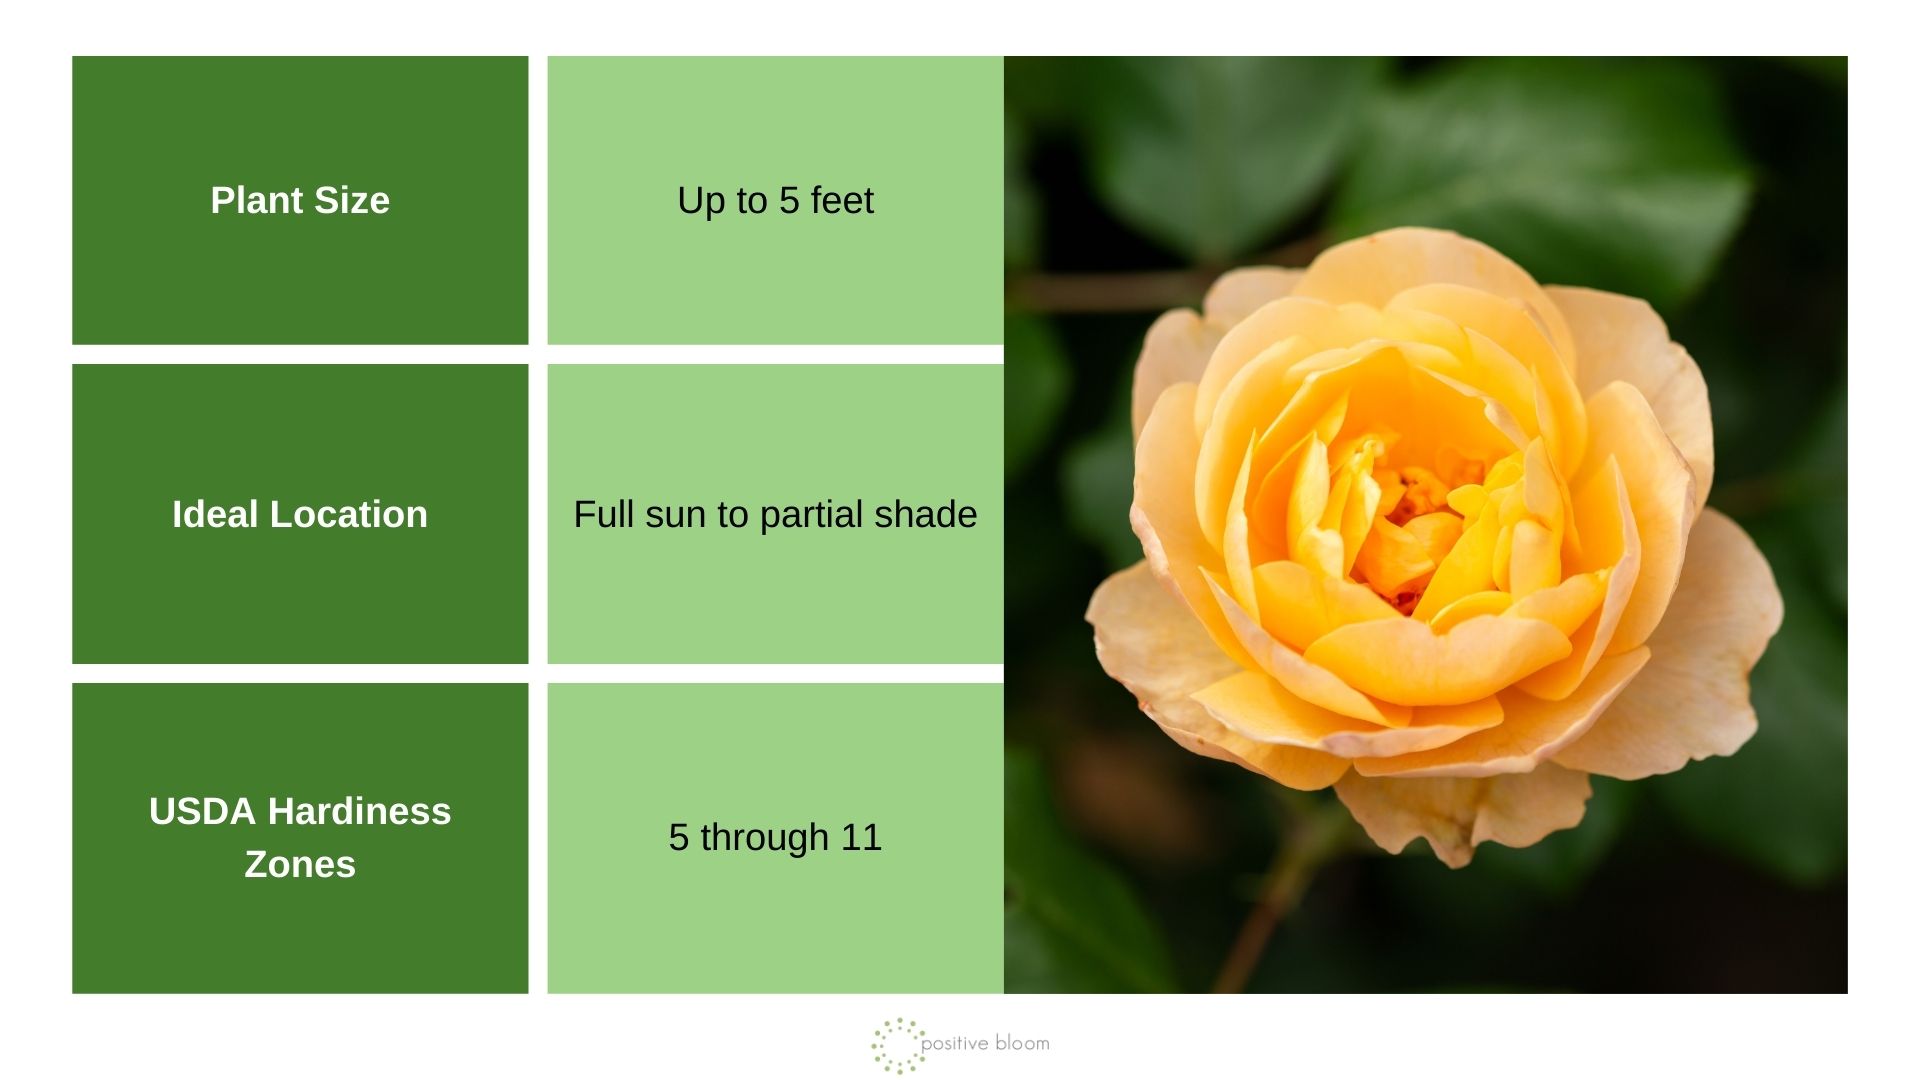 Roald Dahl rose info chart and photo